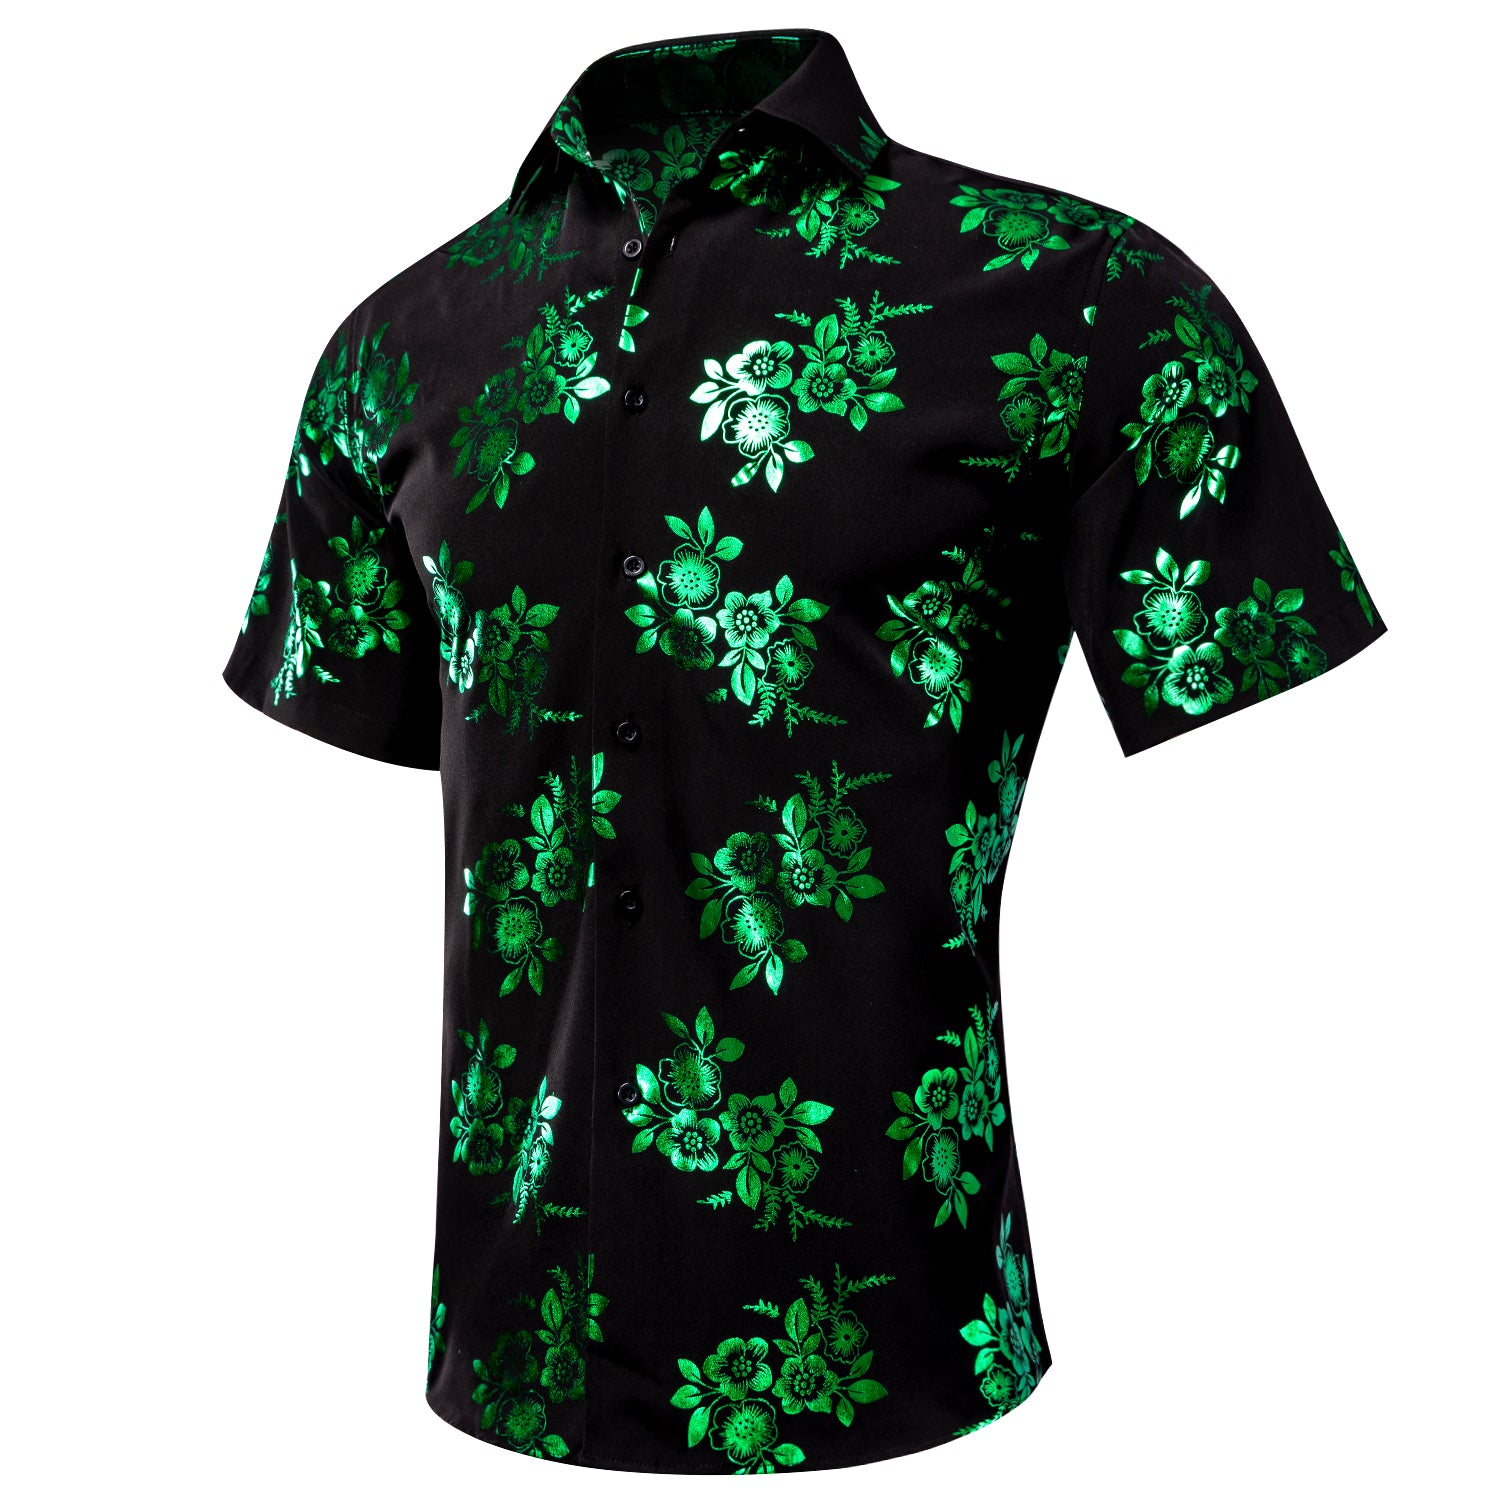 Clearance Sale New Black Green Floral Men's Short Sleeve Shirt